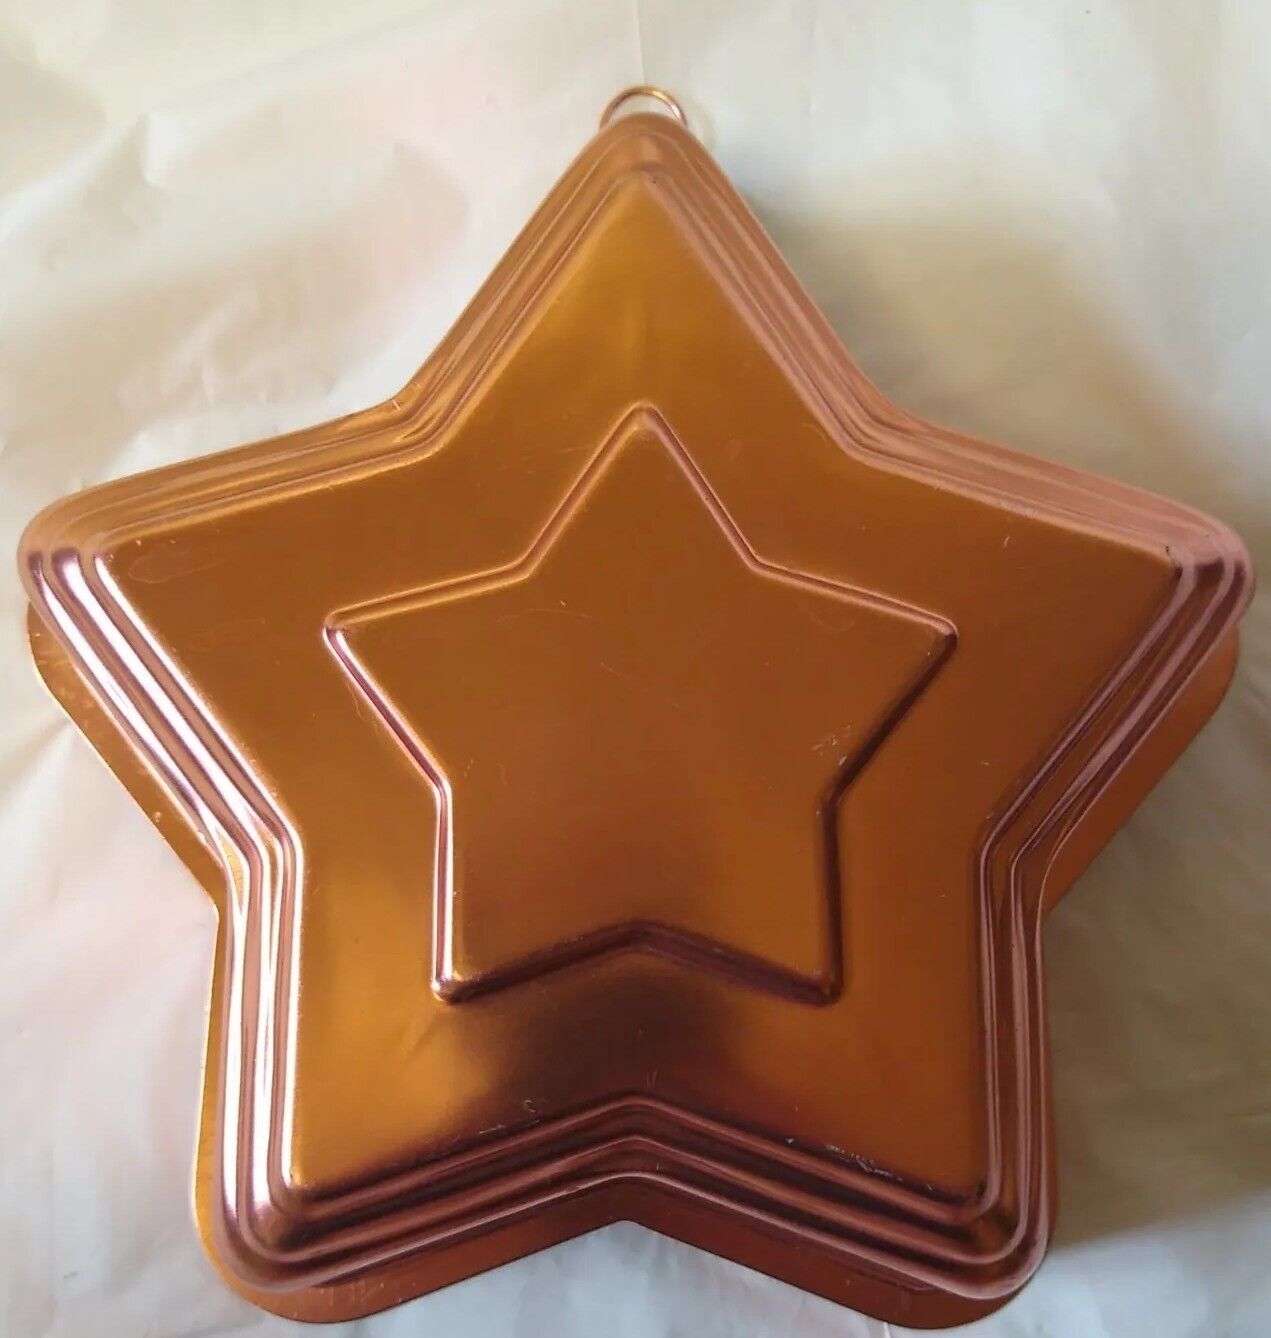 Cake Jello Mold Vintage Copper Star Design Wall Decor 5 Cups Nice Gelatin Mold